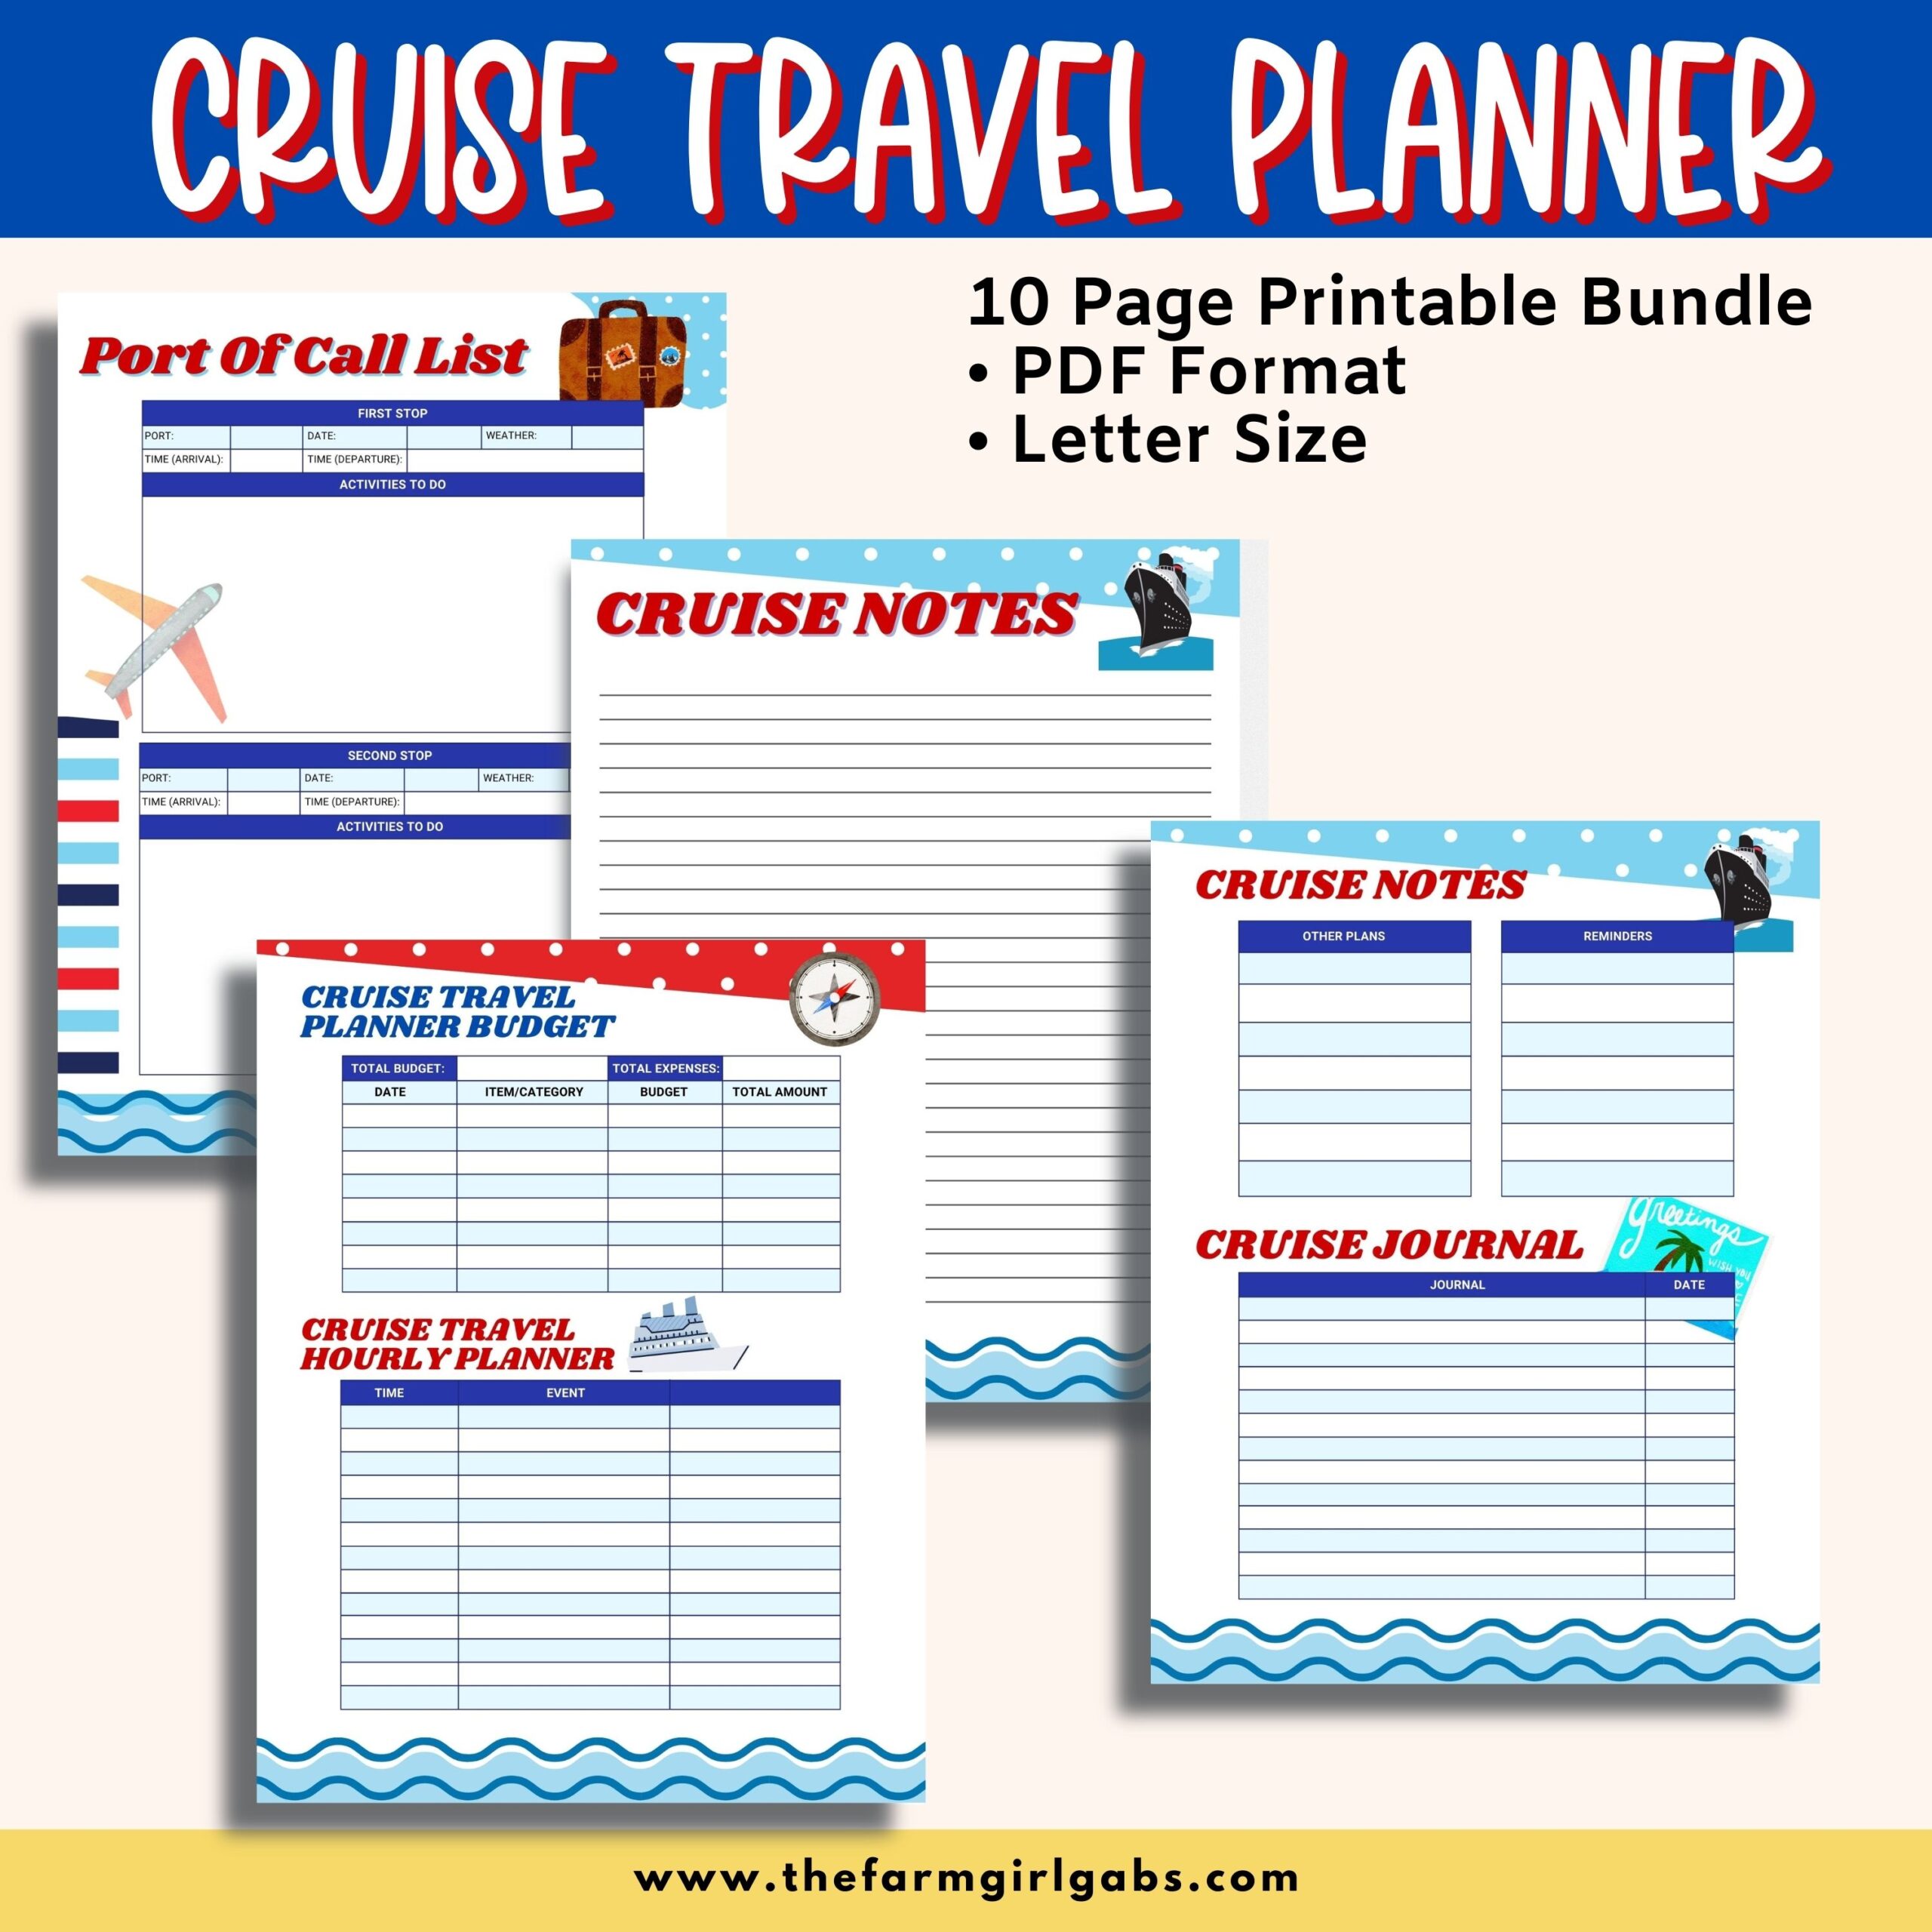 cruise ship travel budget